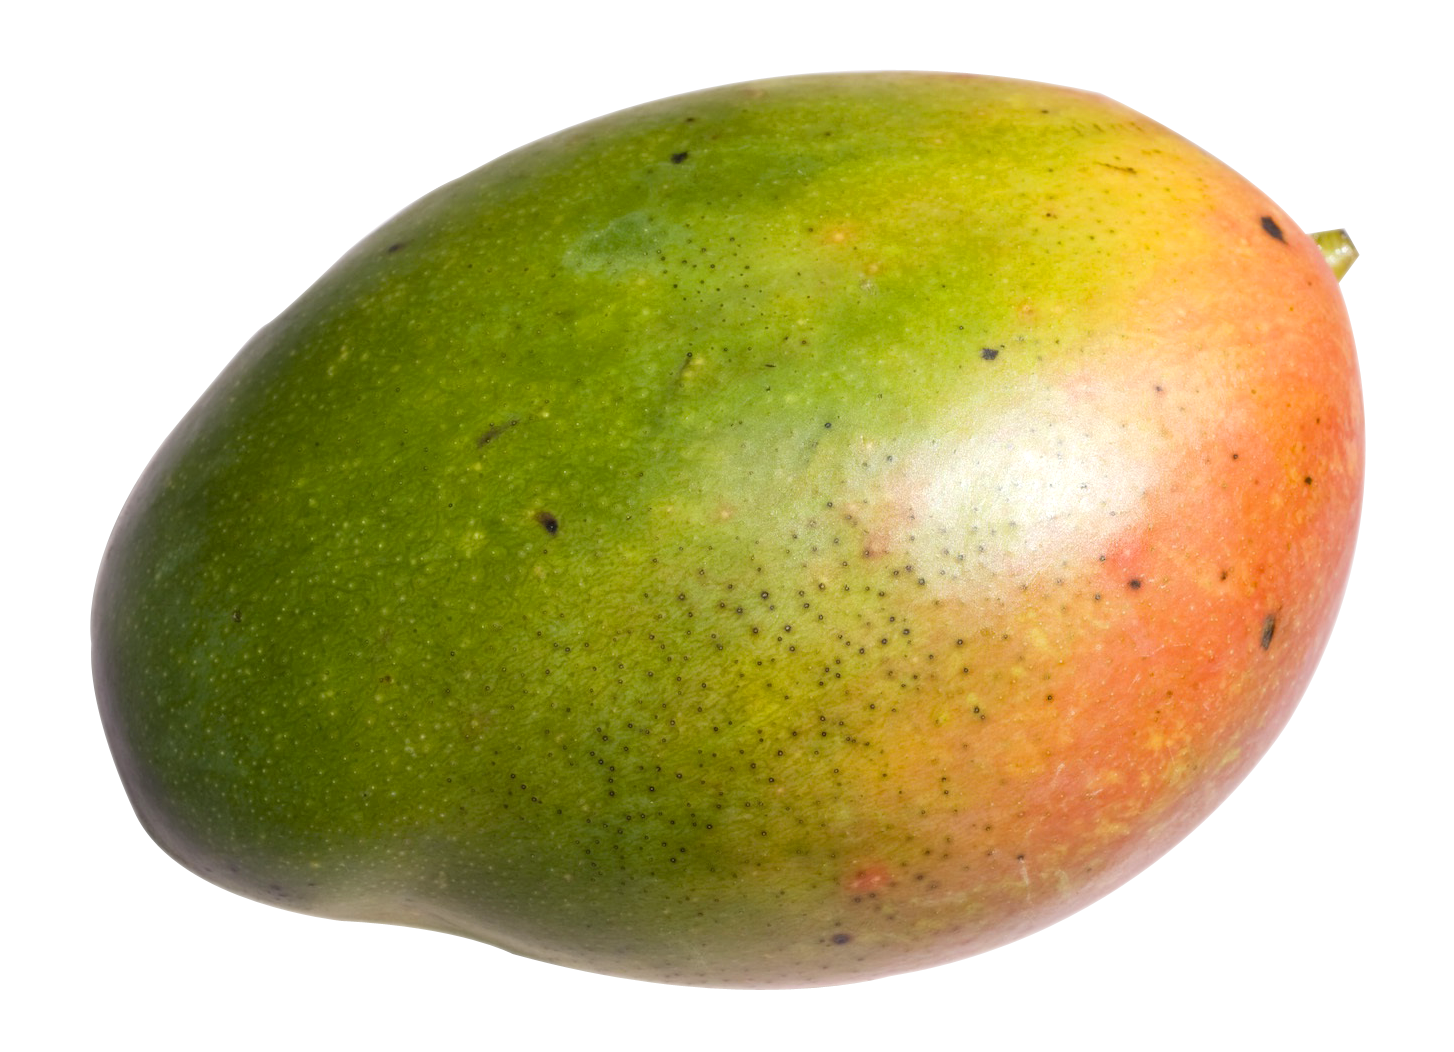 Green Mango PNG pngteam.com